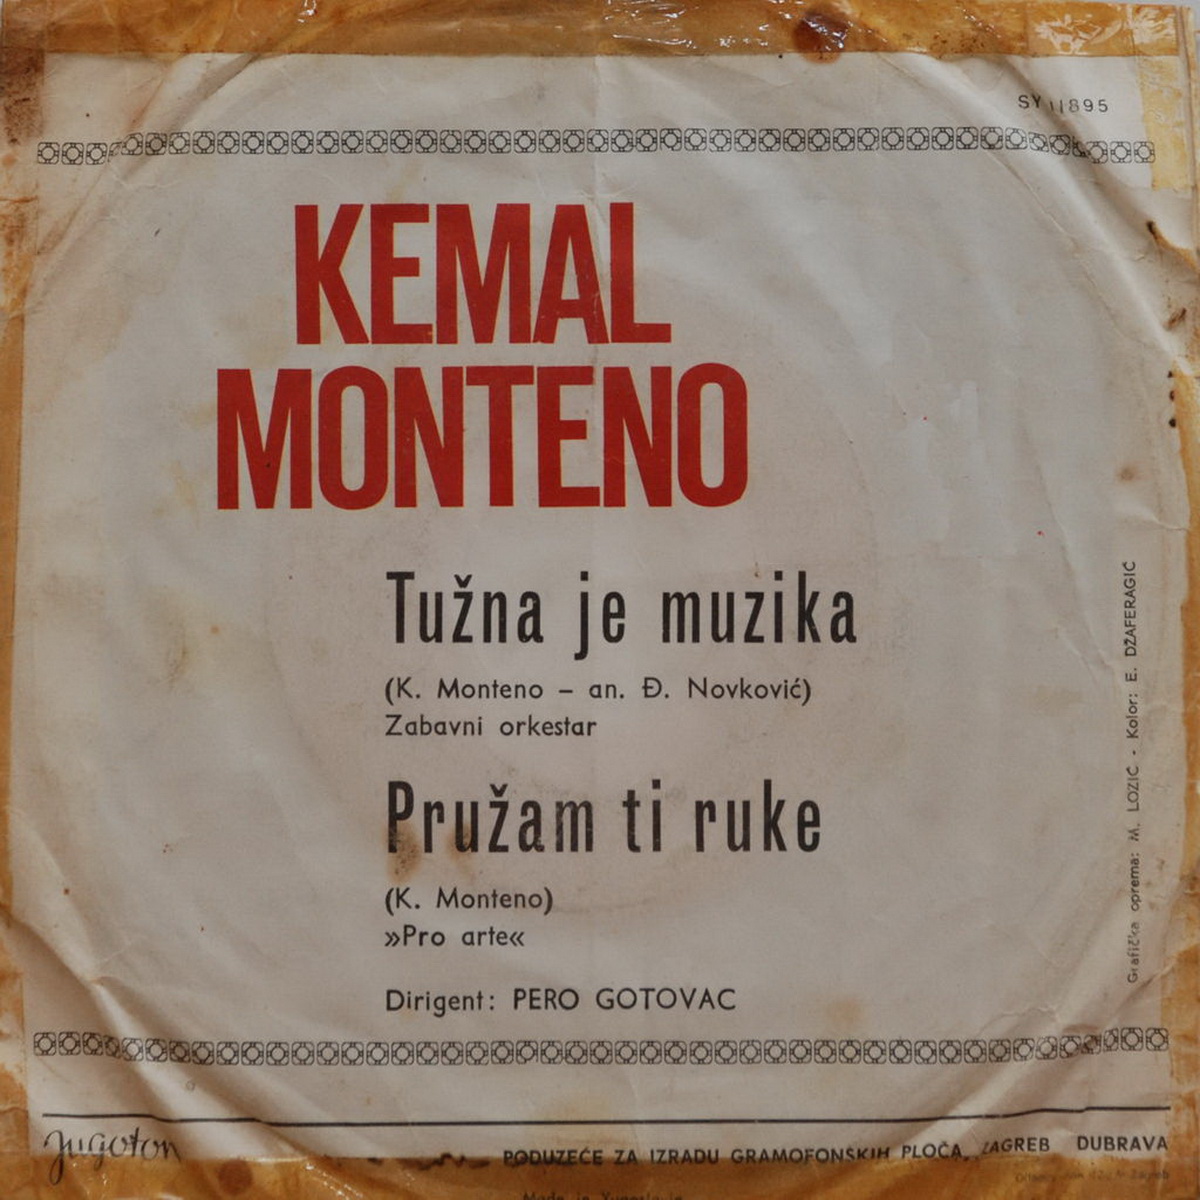 Kemal Monteno 1971 Tuzna je muzika b